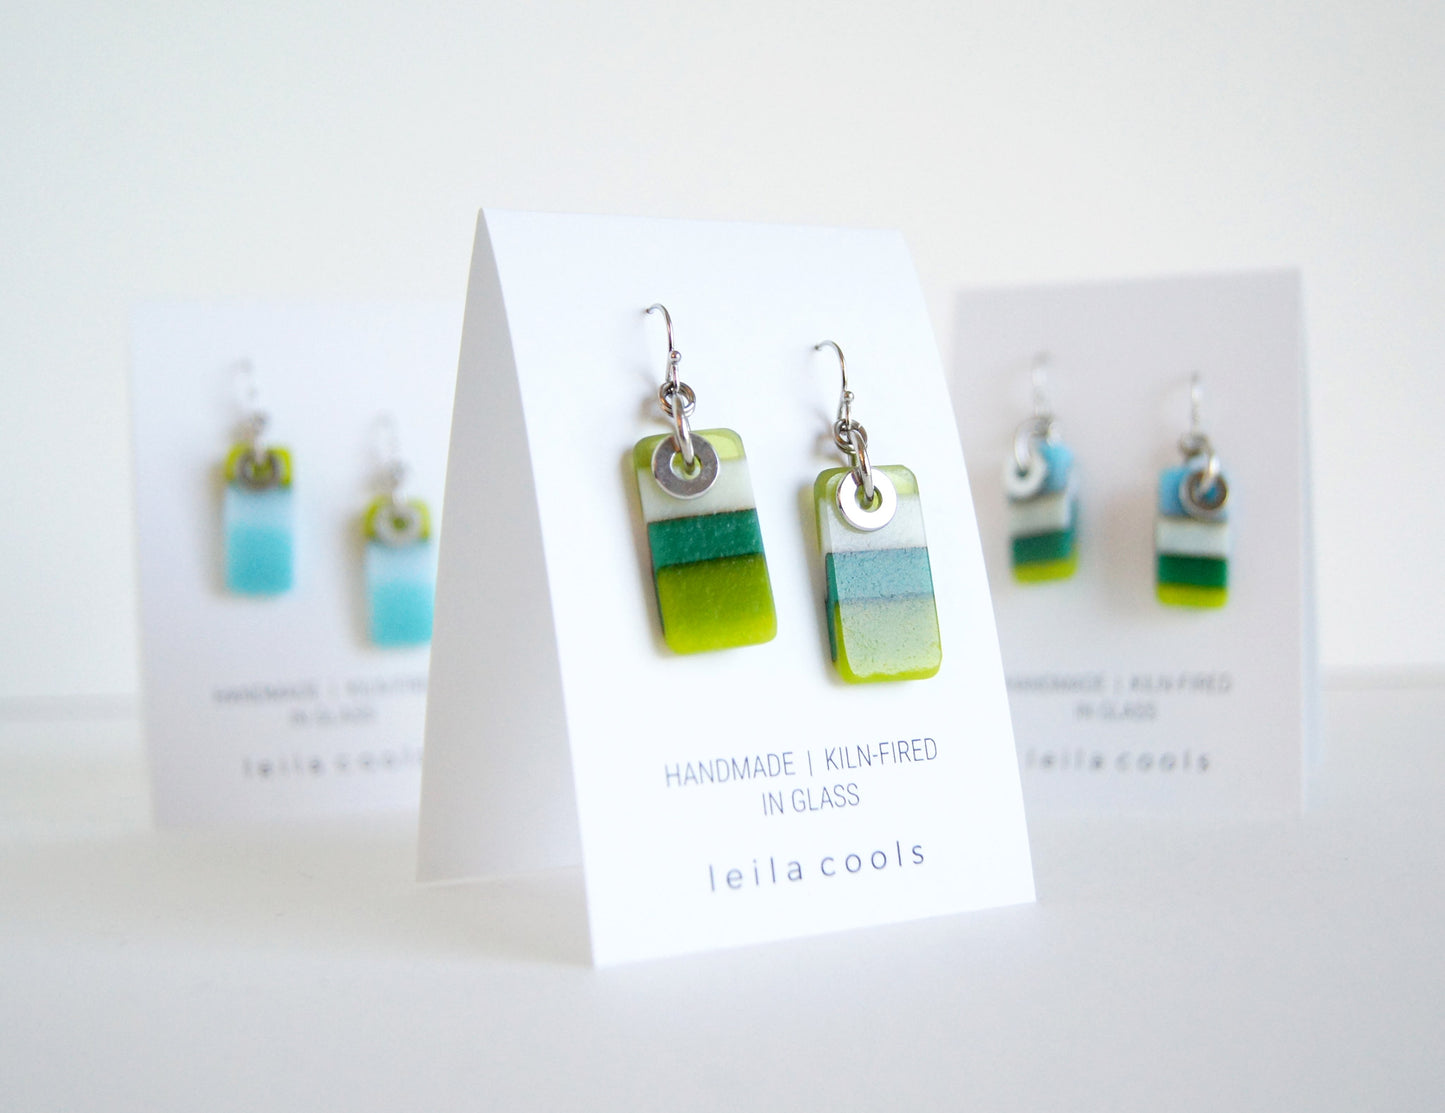 kiln-fired glass earrings handmade by Leila Cools